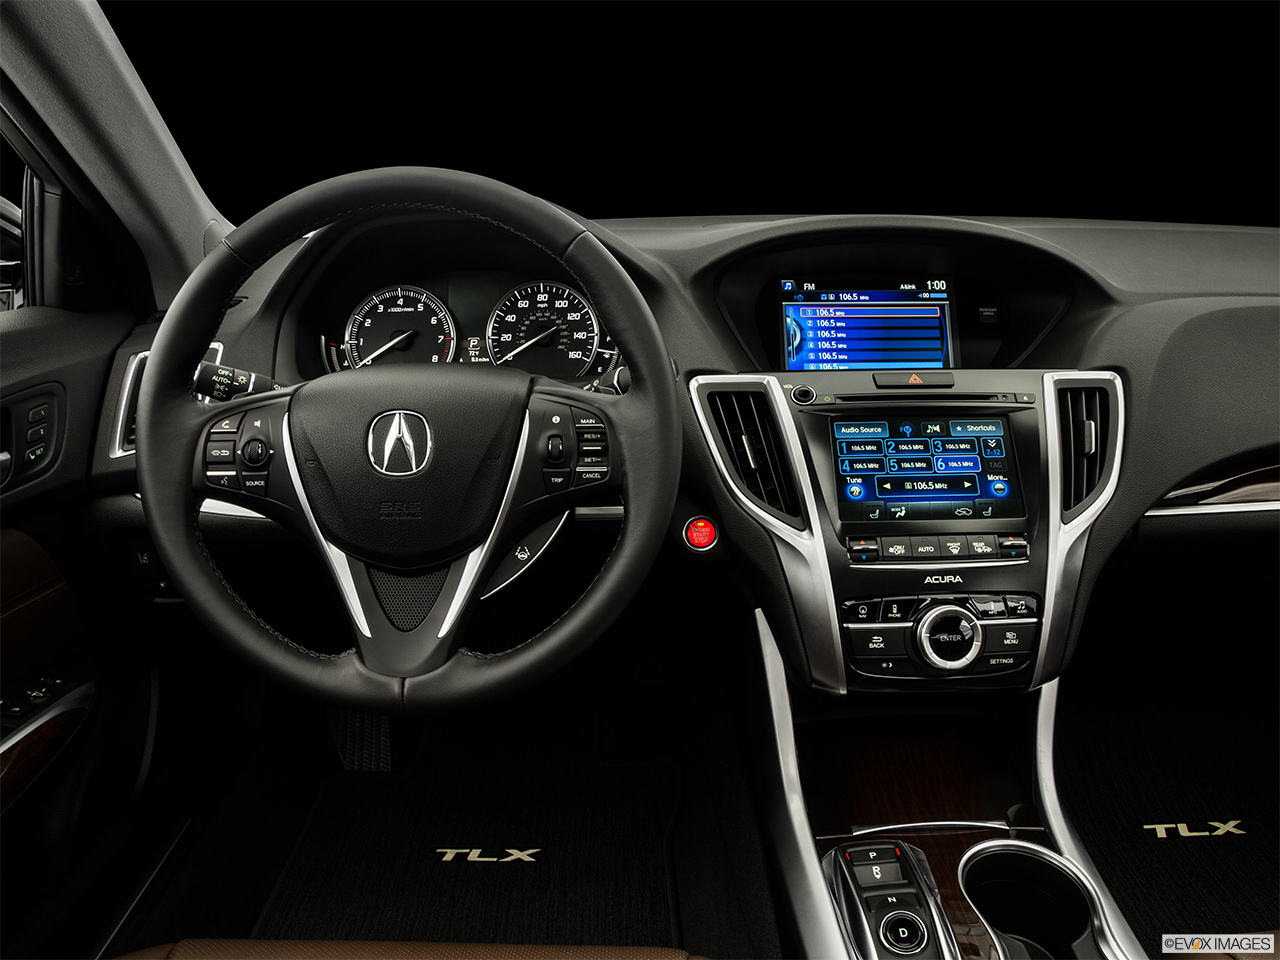 2015 Acura TLX 3.5 V-6 9-AT SH-AWD Centered wide dash shot - "night" shot. 